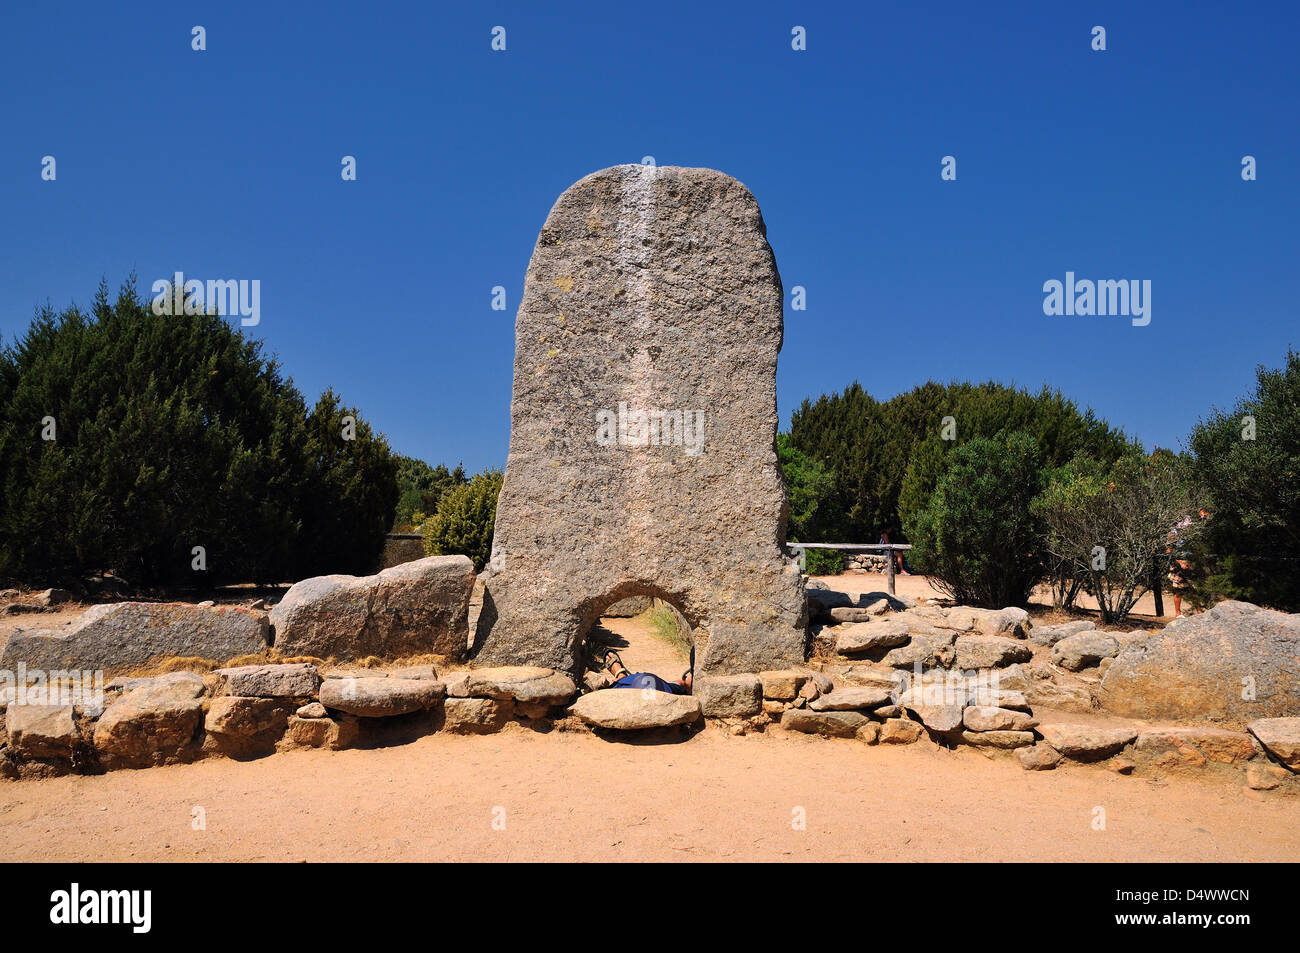 Sardegna Italy Tomba dei giganti, Li Mizzani by andrea quercioli Stock Photo